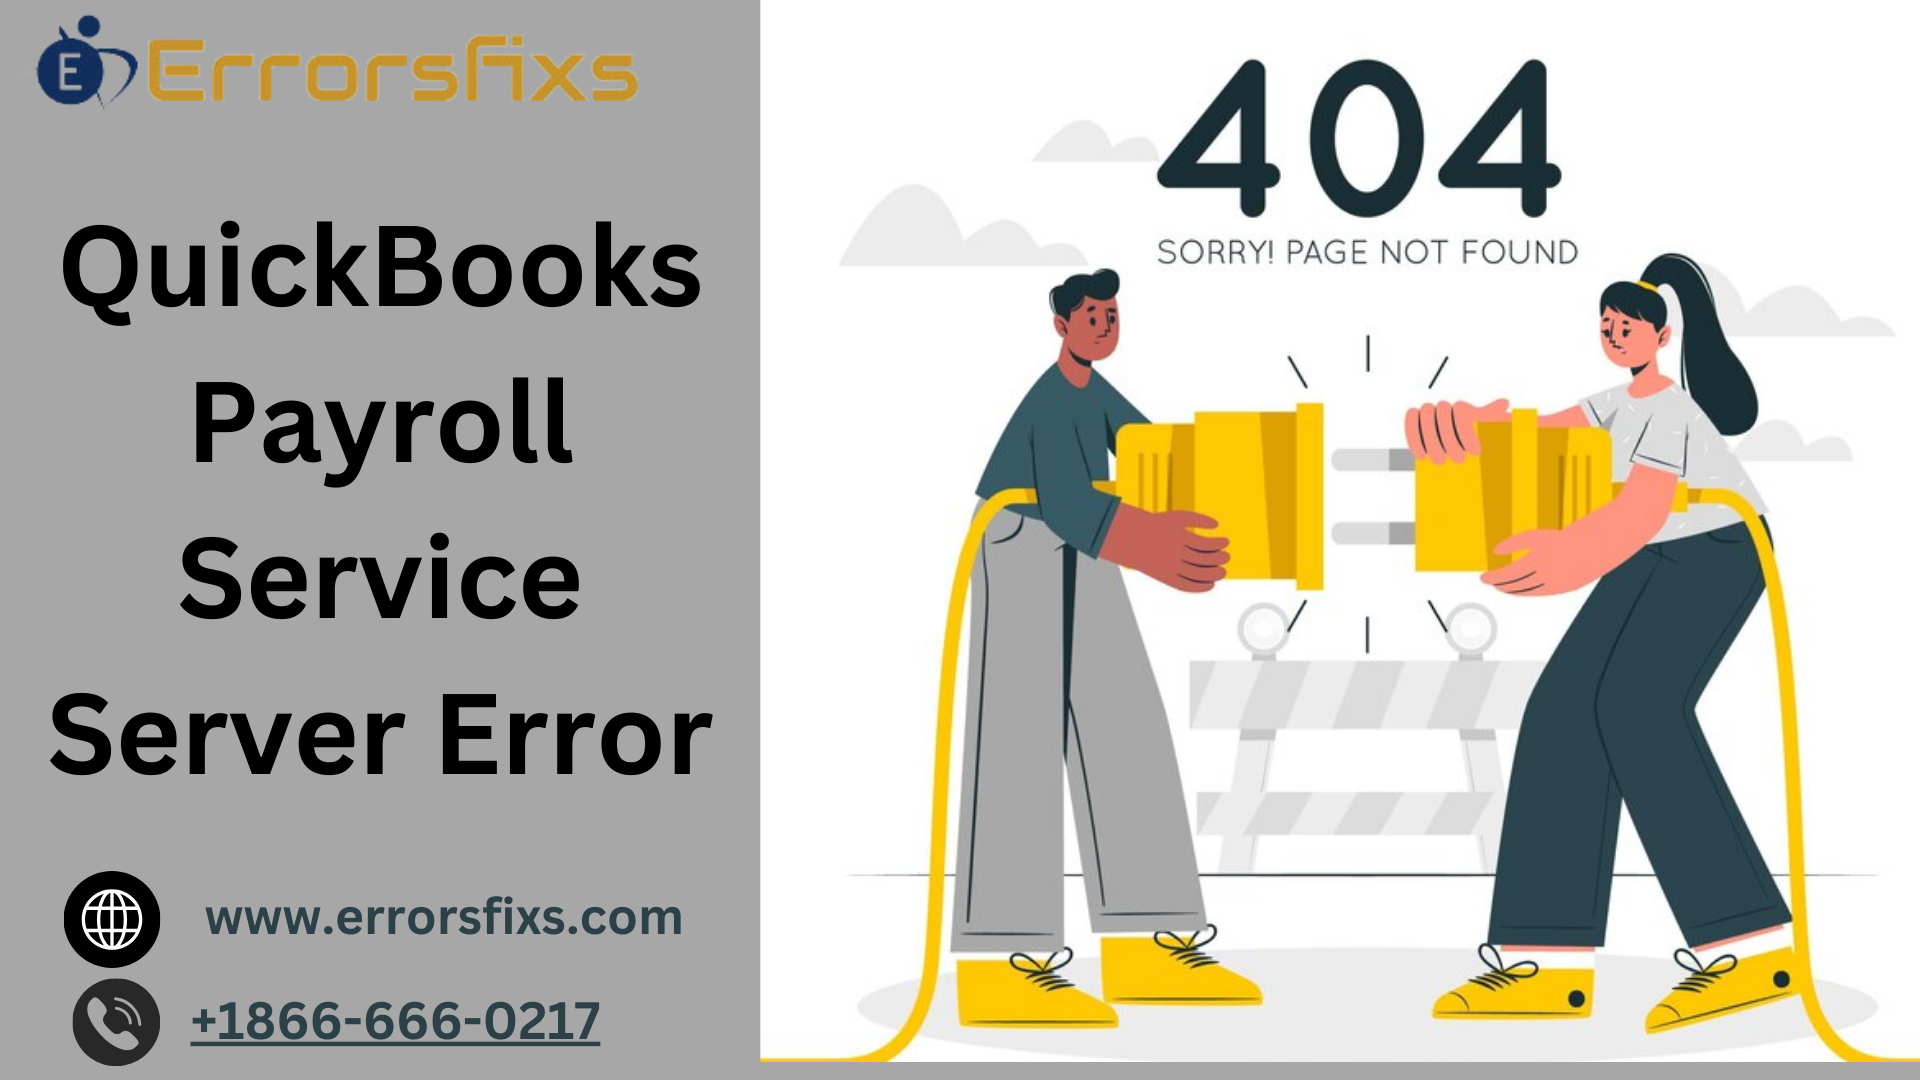 QuickBooks Payroll Service Server Error